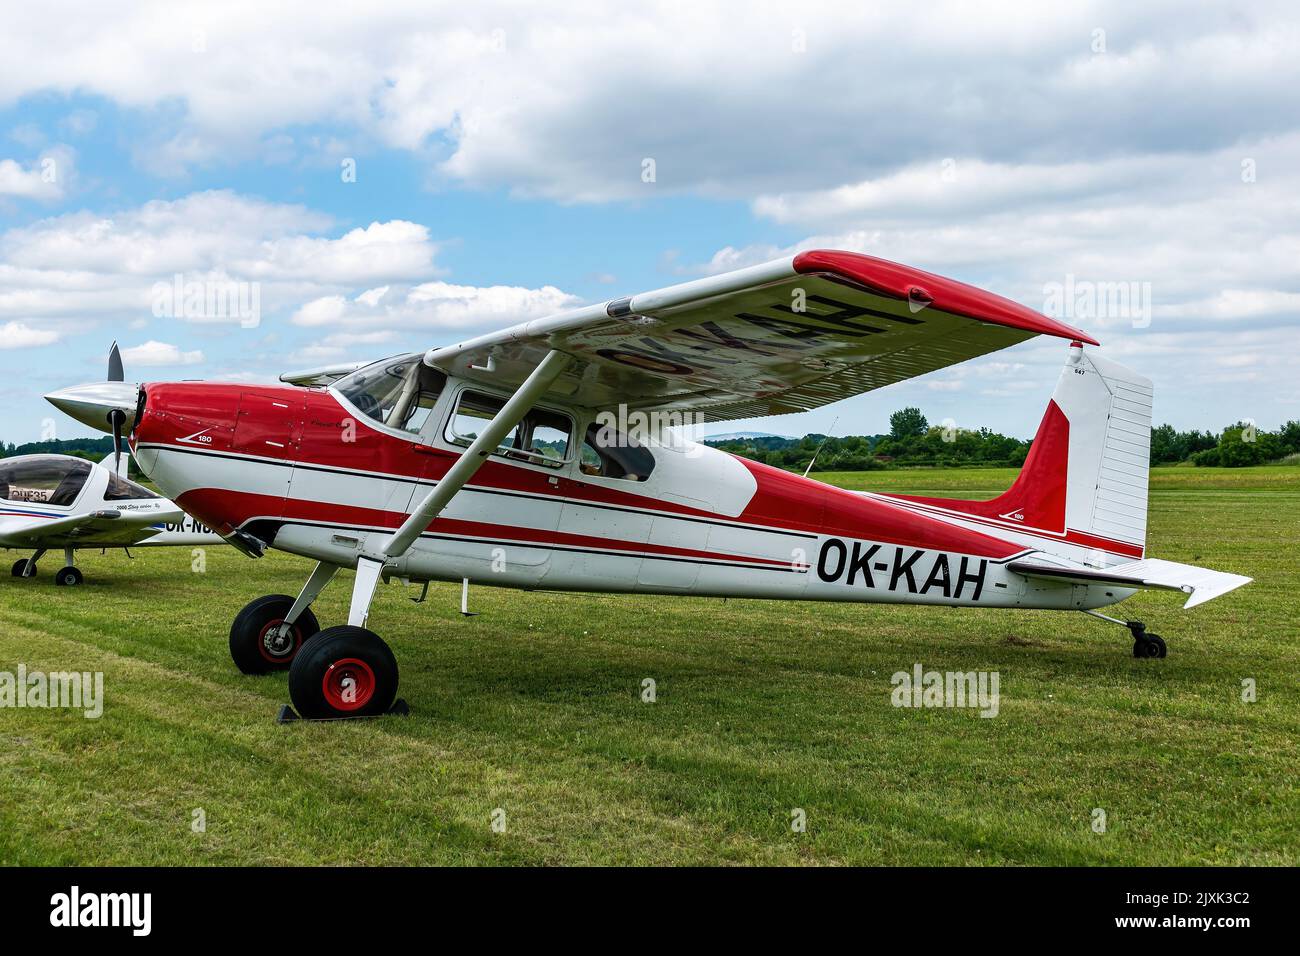 A Cessna 180 Skywagon aircraft parked on a field Stock Photo